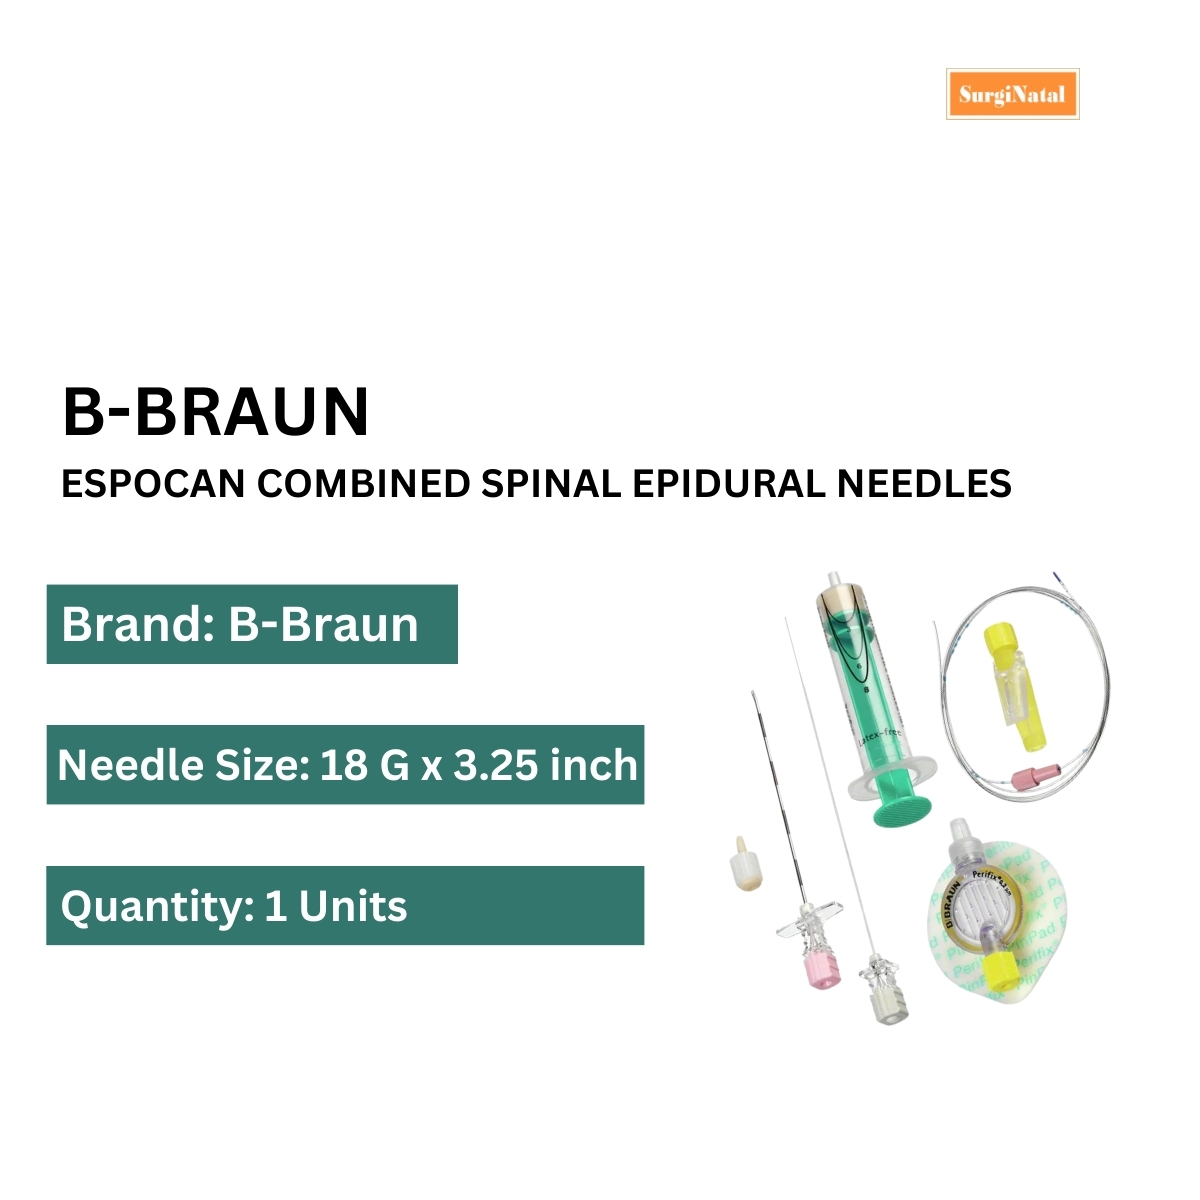  espocan combined spinal epidural needles